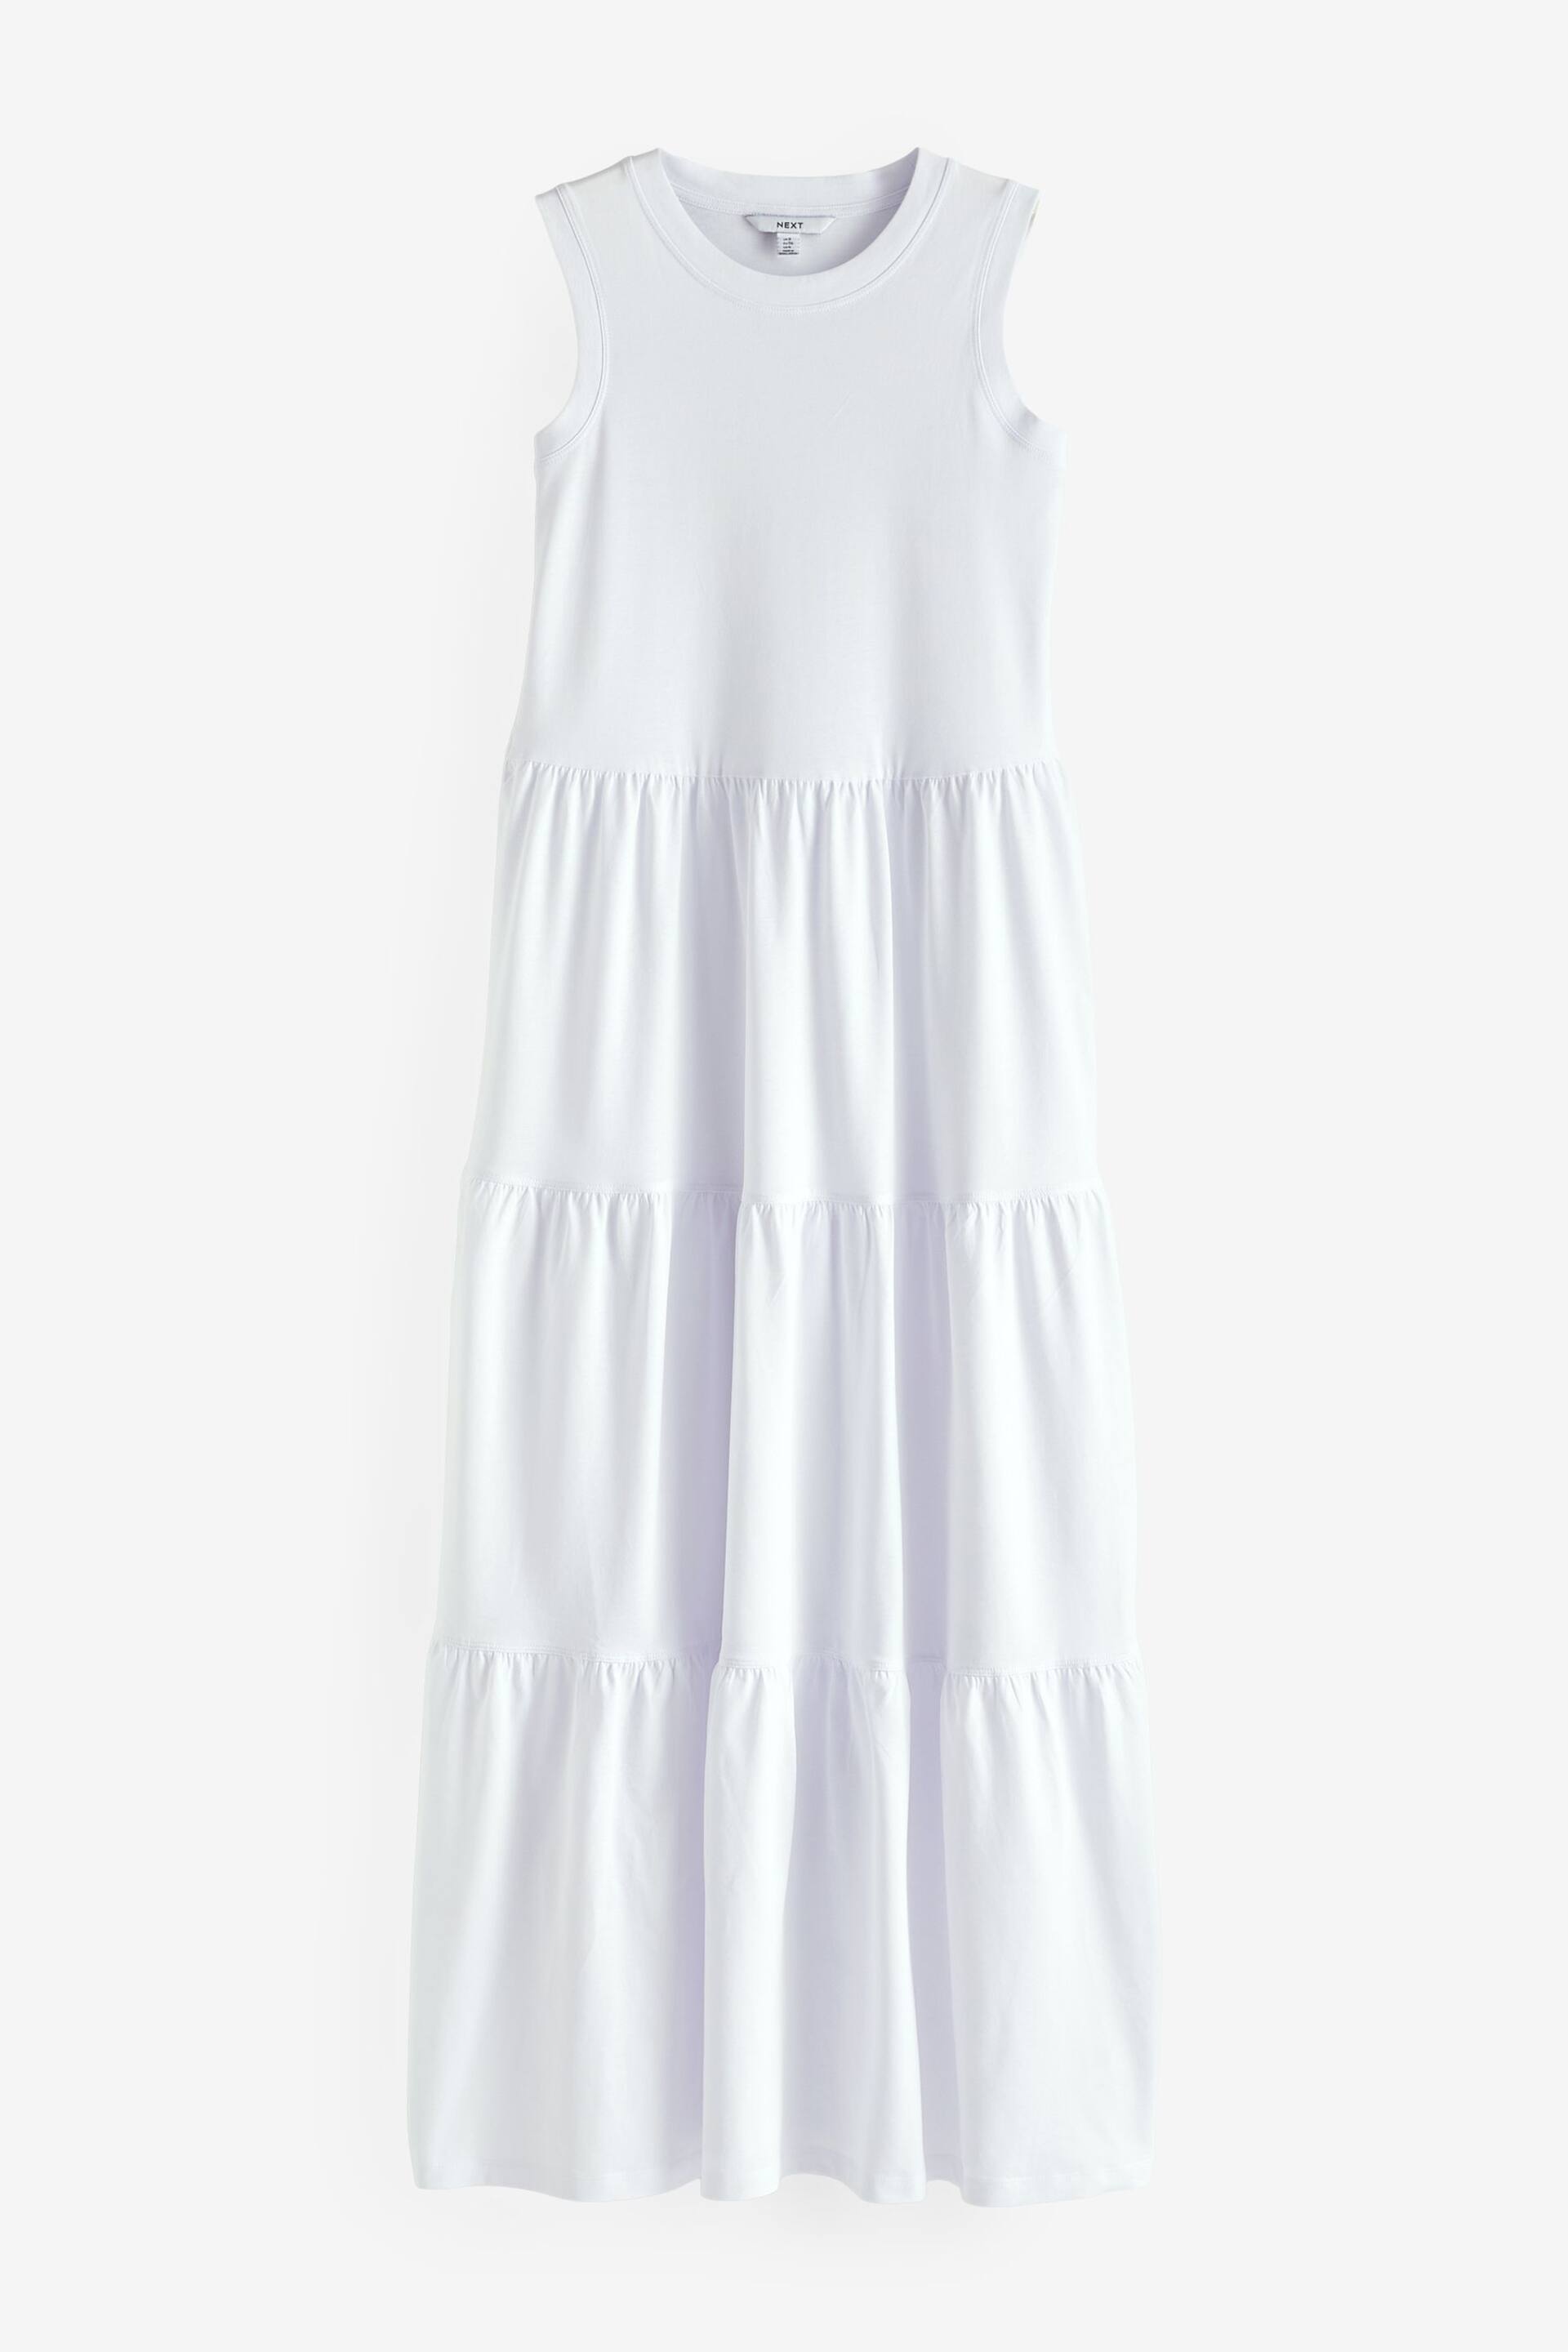 White Sleeveless Crew Neck Tiered Summer Maxi Jersey Dress - Image 5 of 6